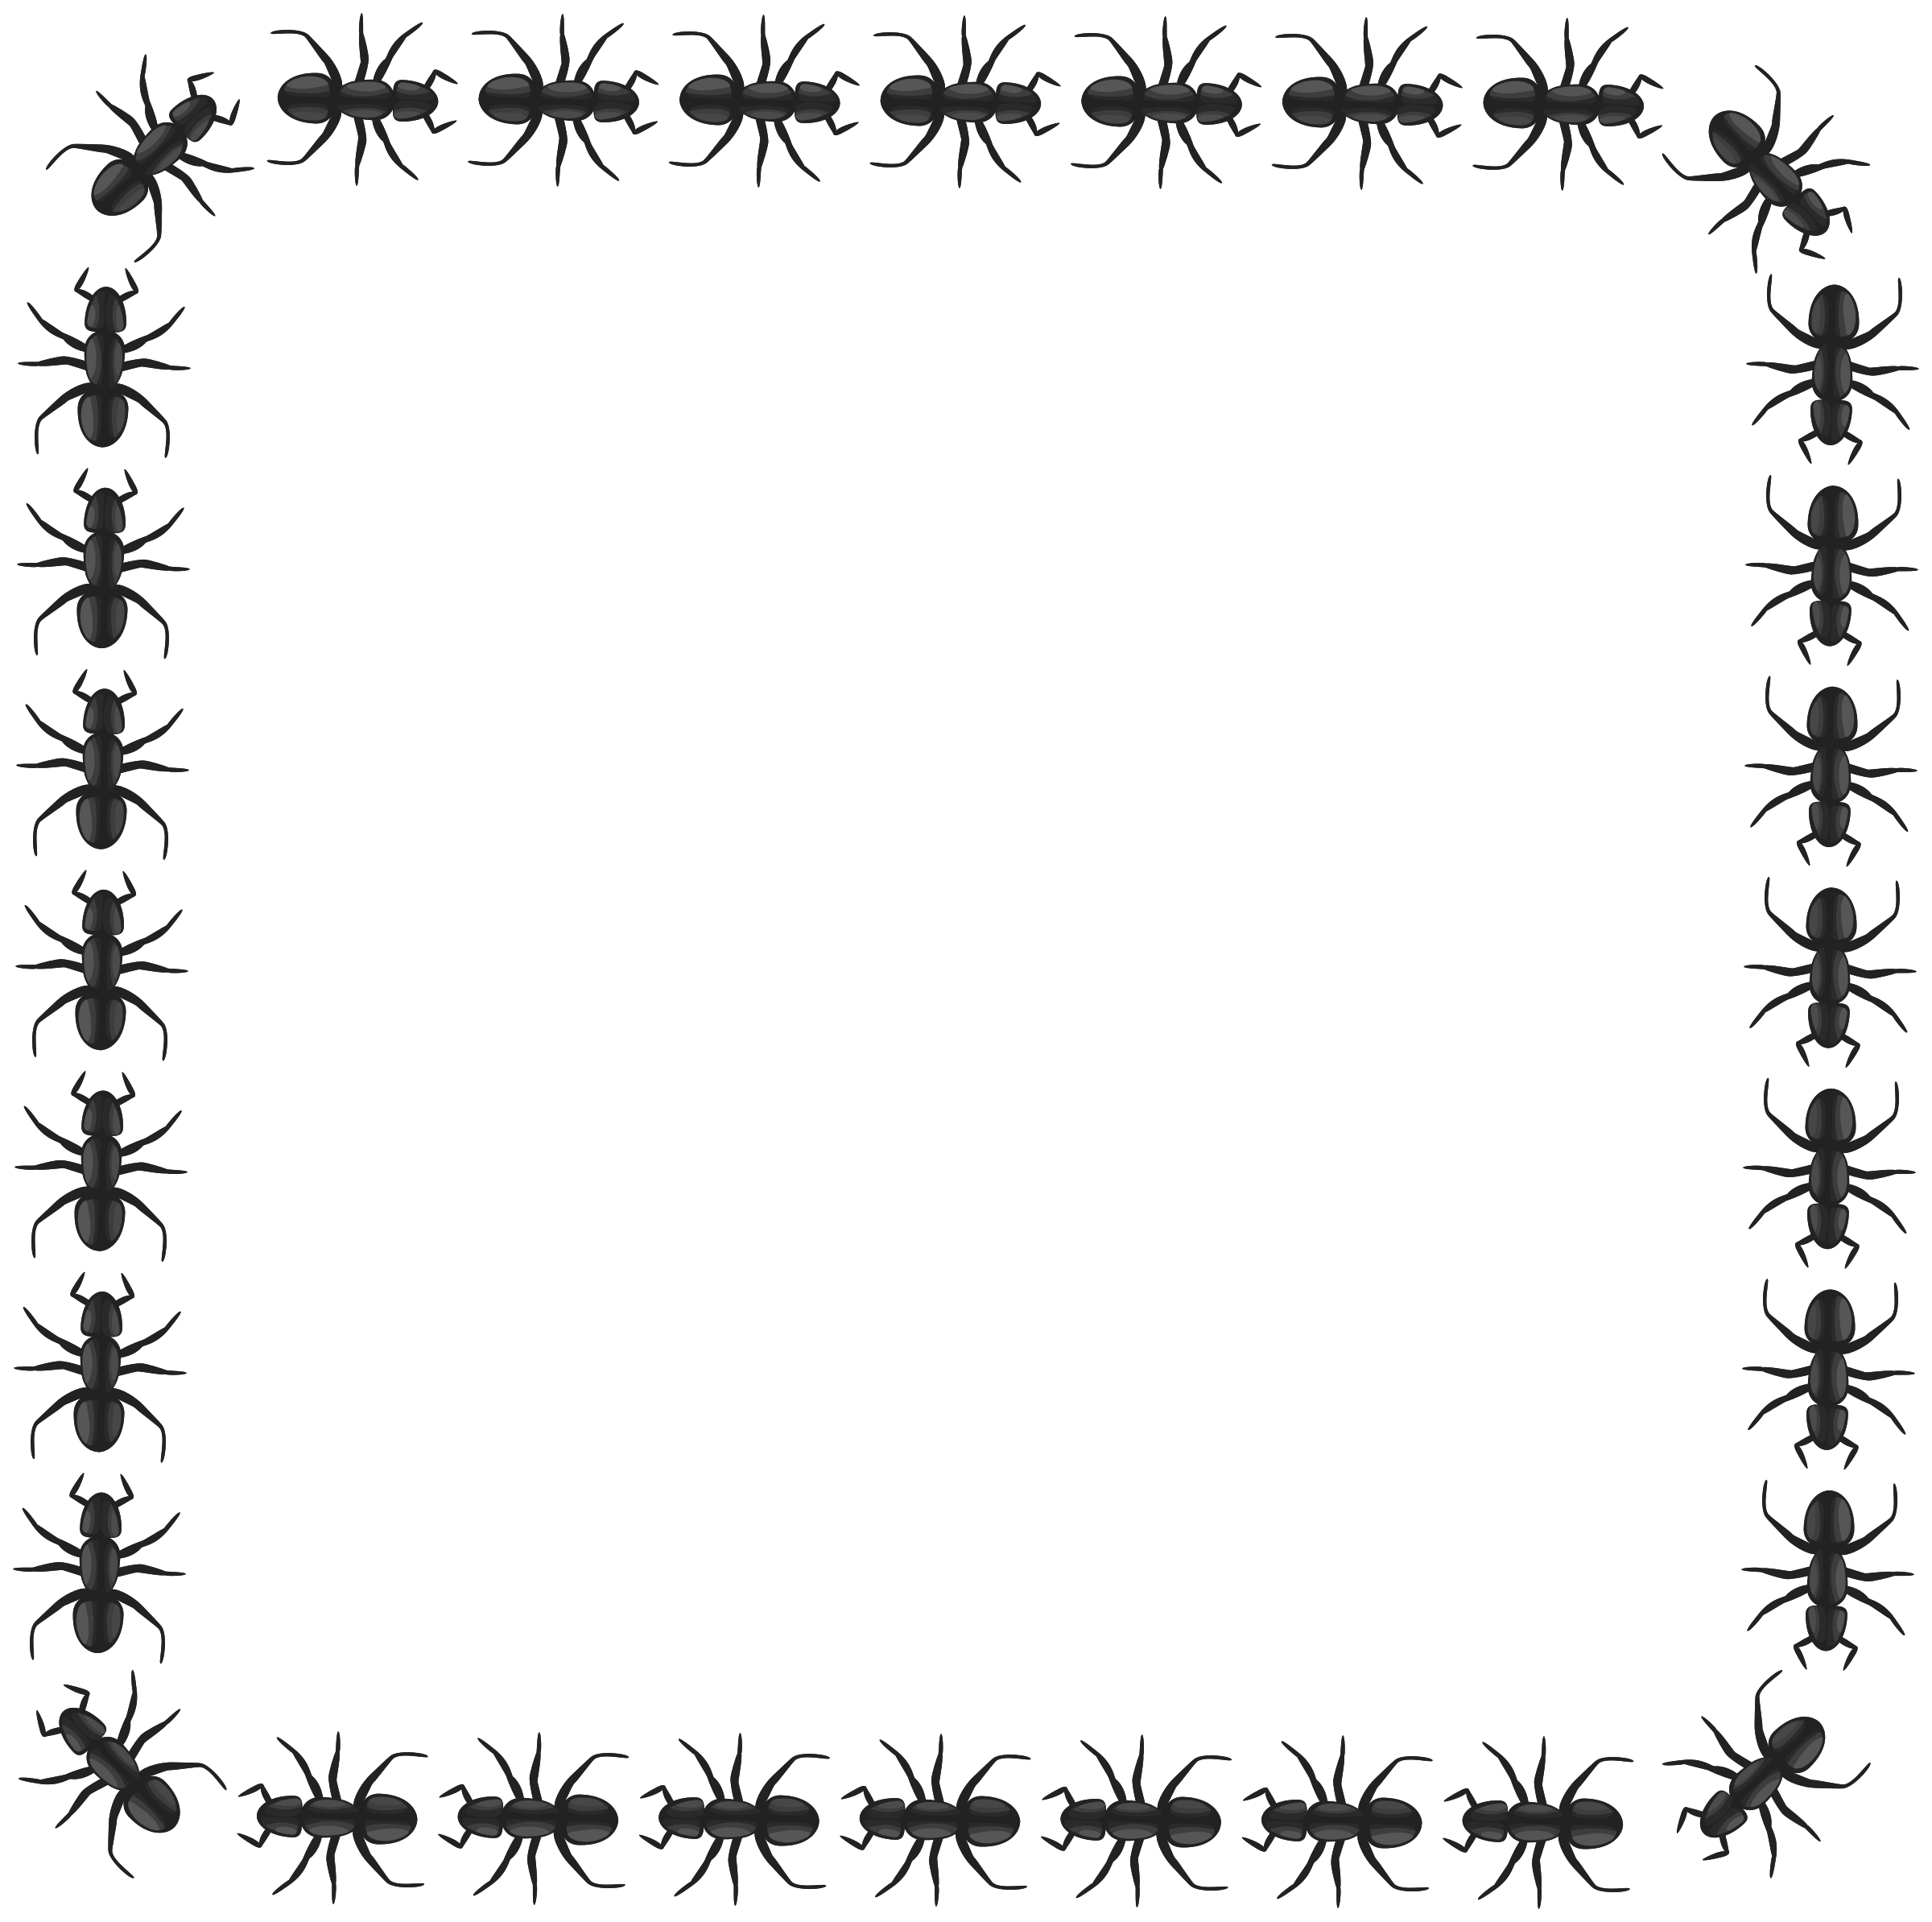 Ant border big image. Square clipart black outline